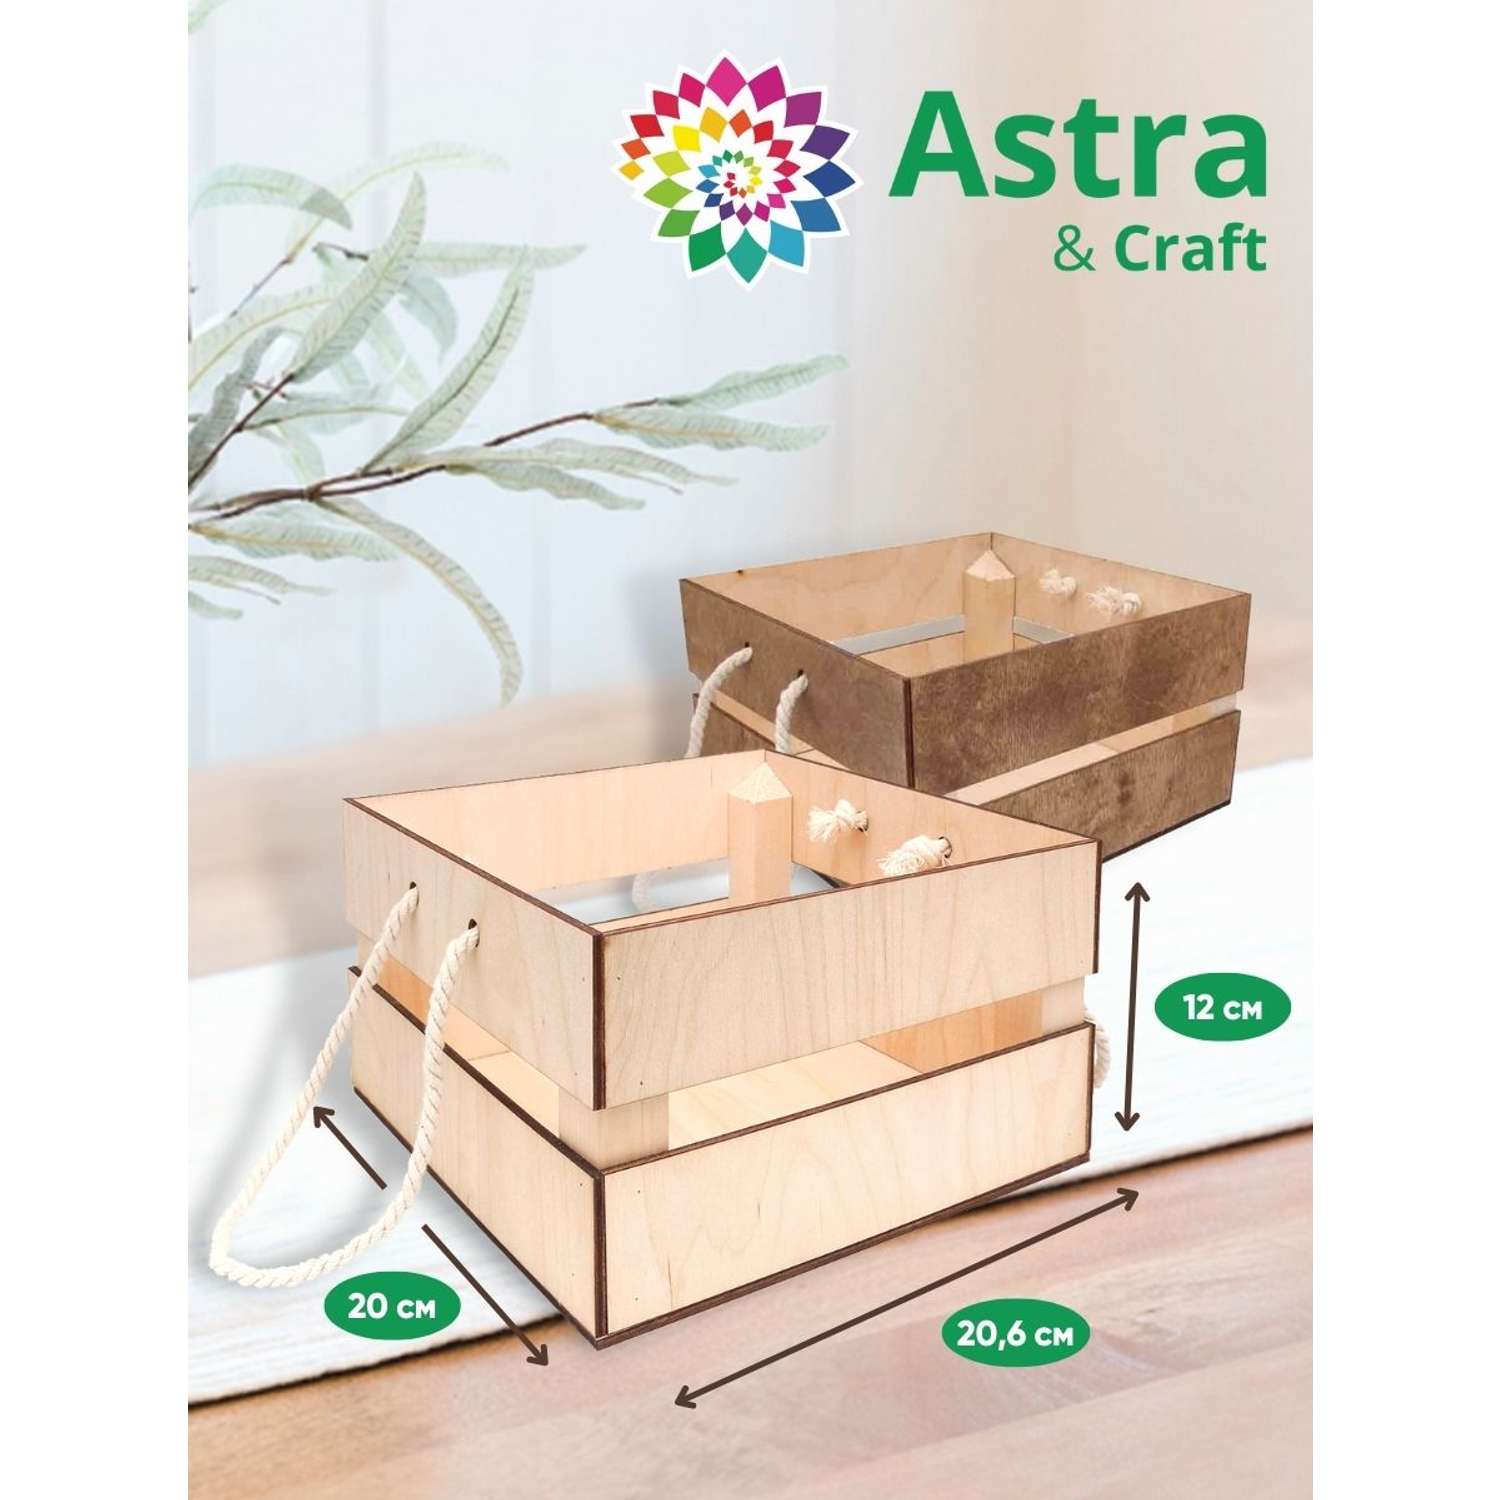 Кашпо Astra Craft с ручками для творчества рукоделия флористики 20.6х20х12 см дуб - фото 3